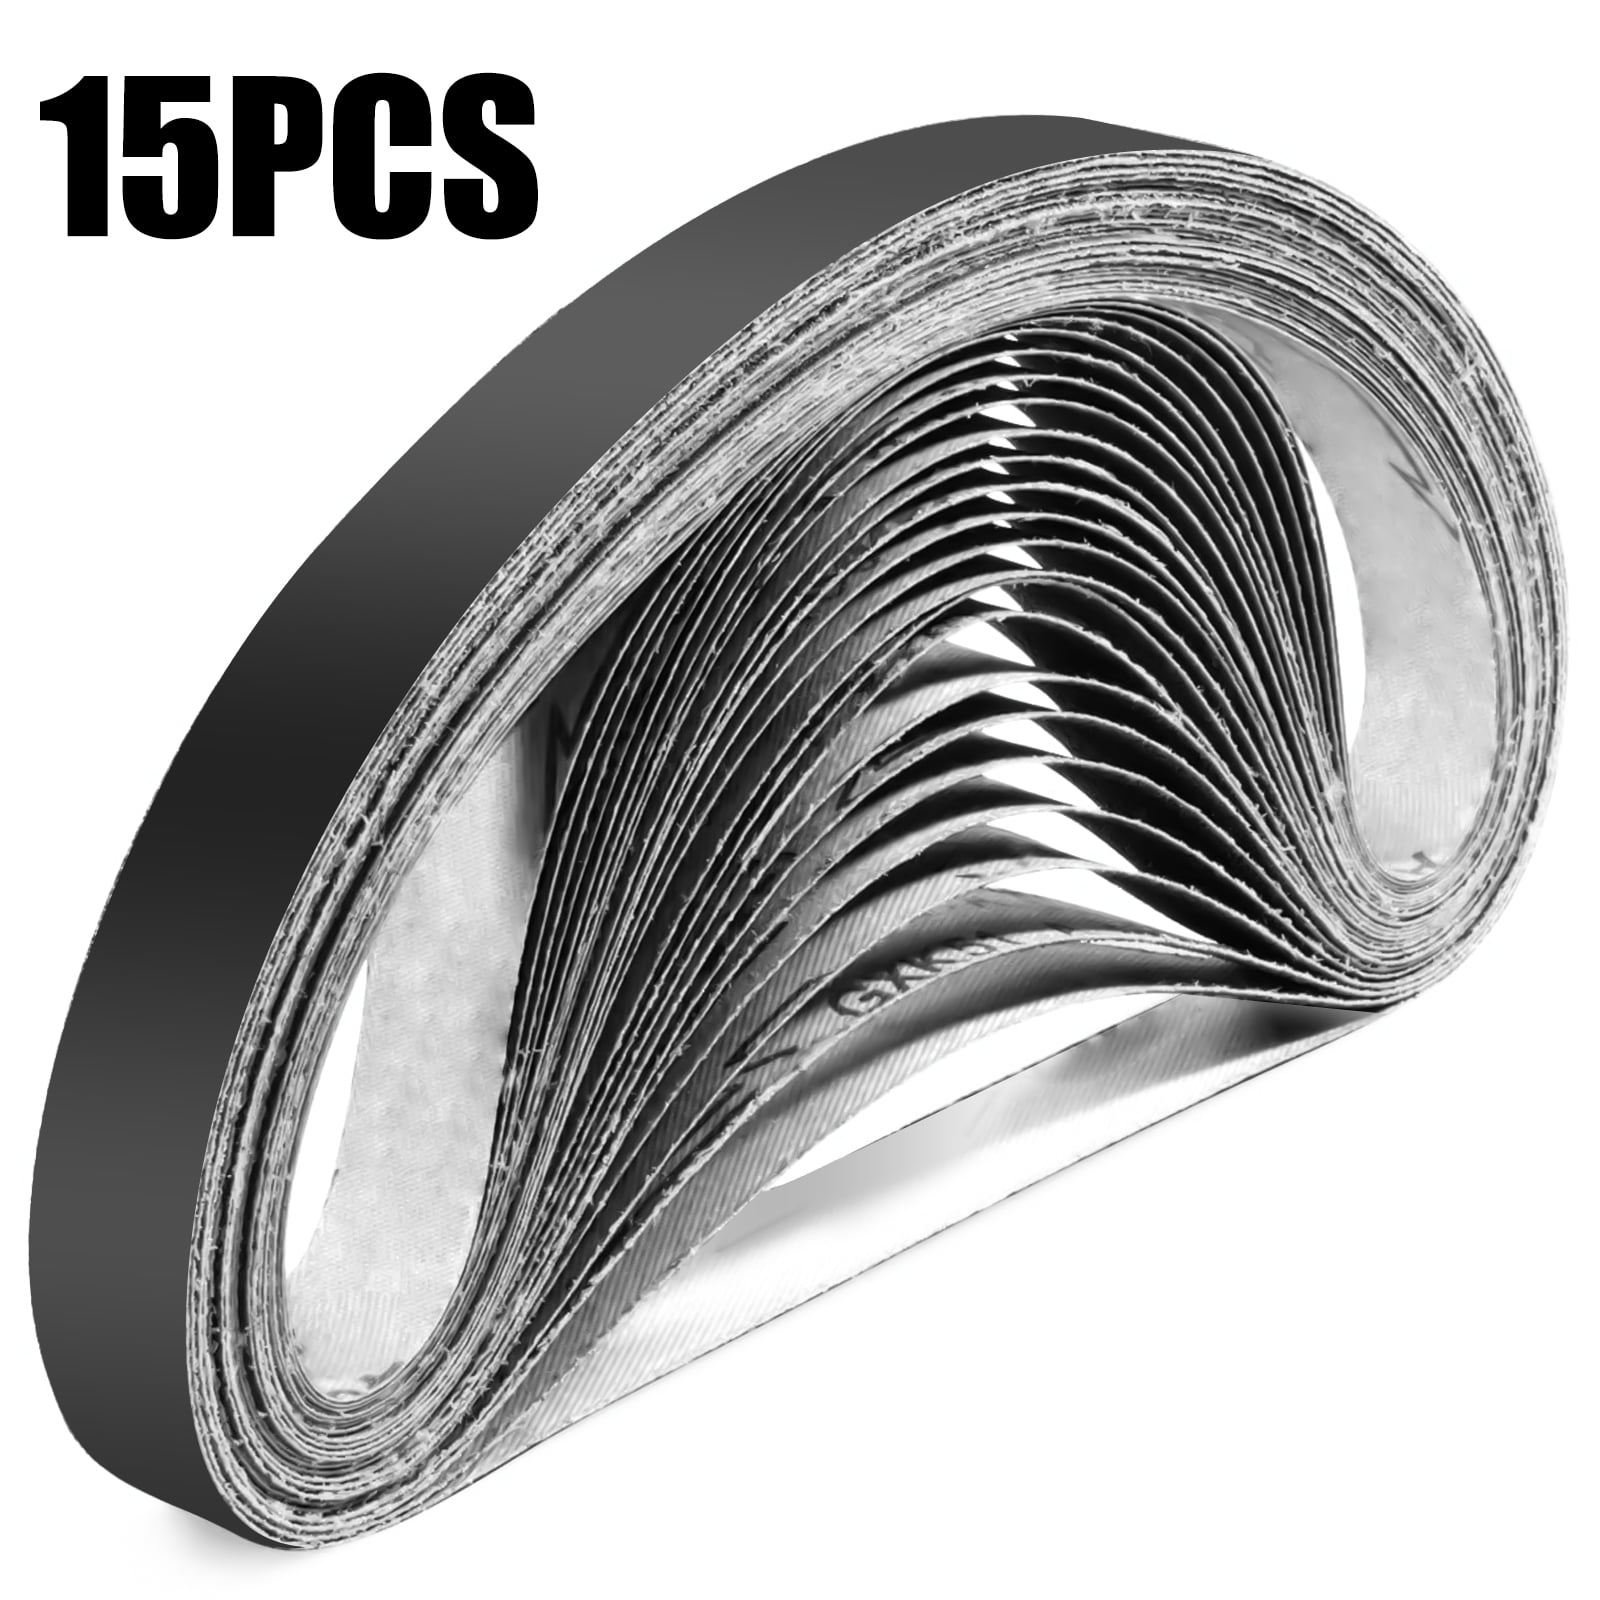 15pcs 1x30 Inches Sanding Sander Belts 600 800 1000 Grit Polishing Replacement 